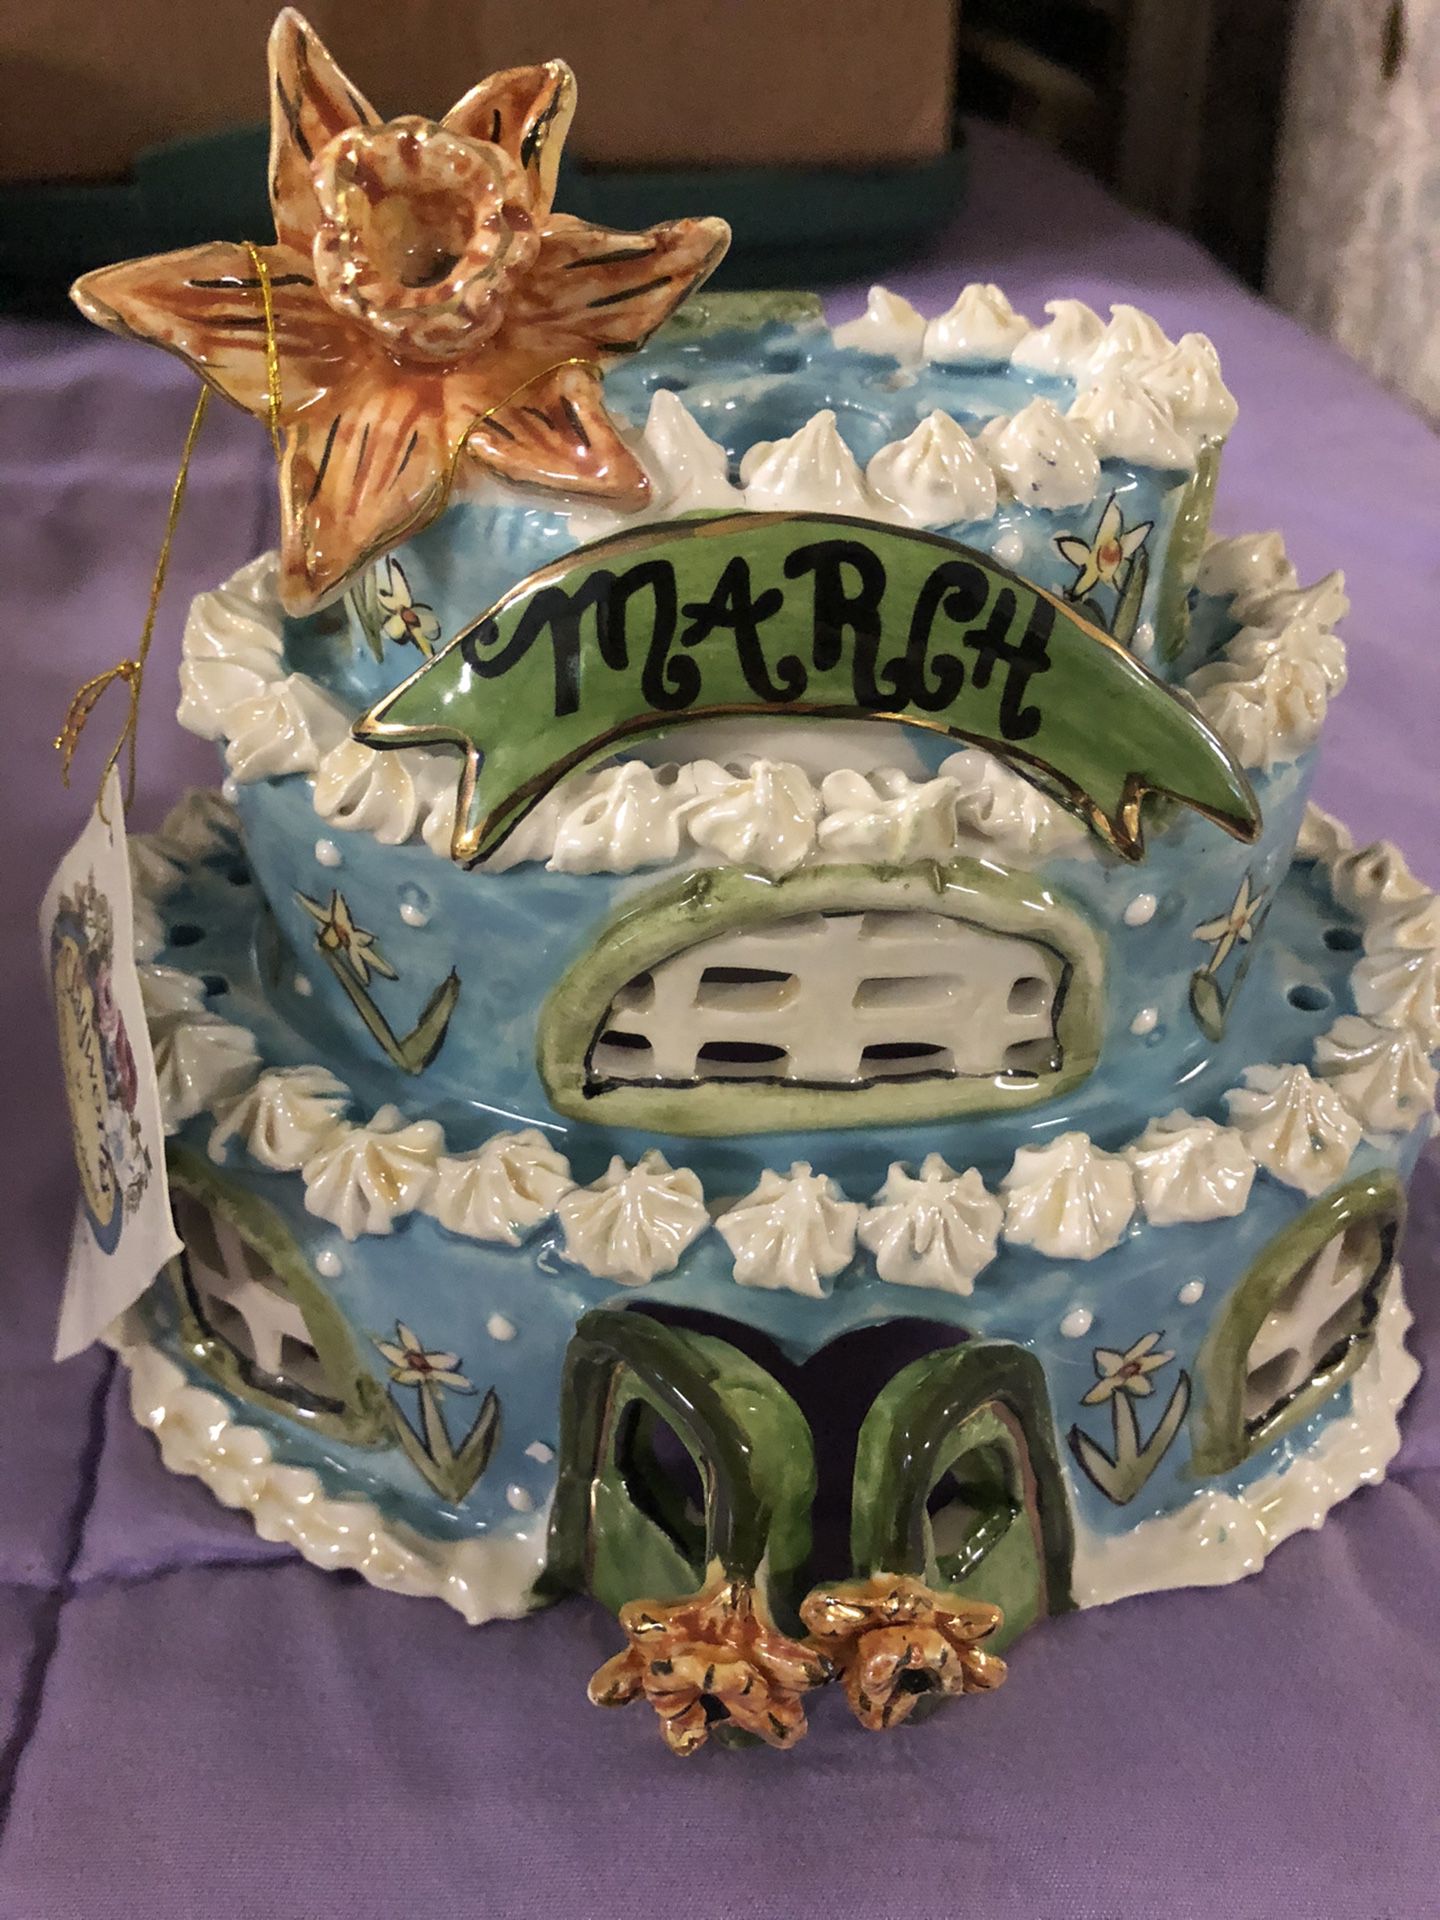 March birthday cake topper ceramic